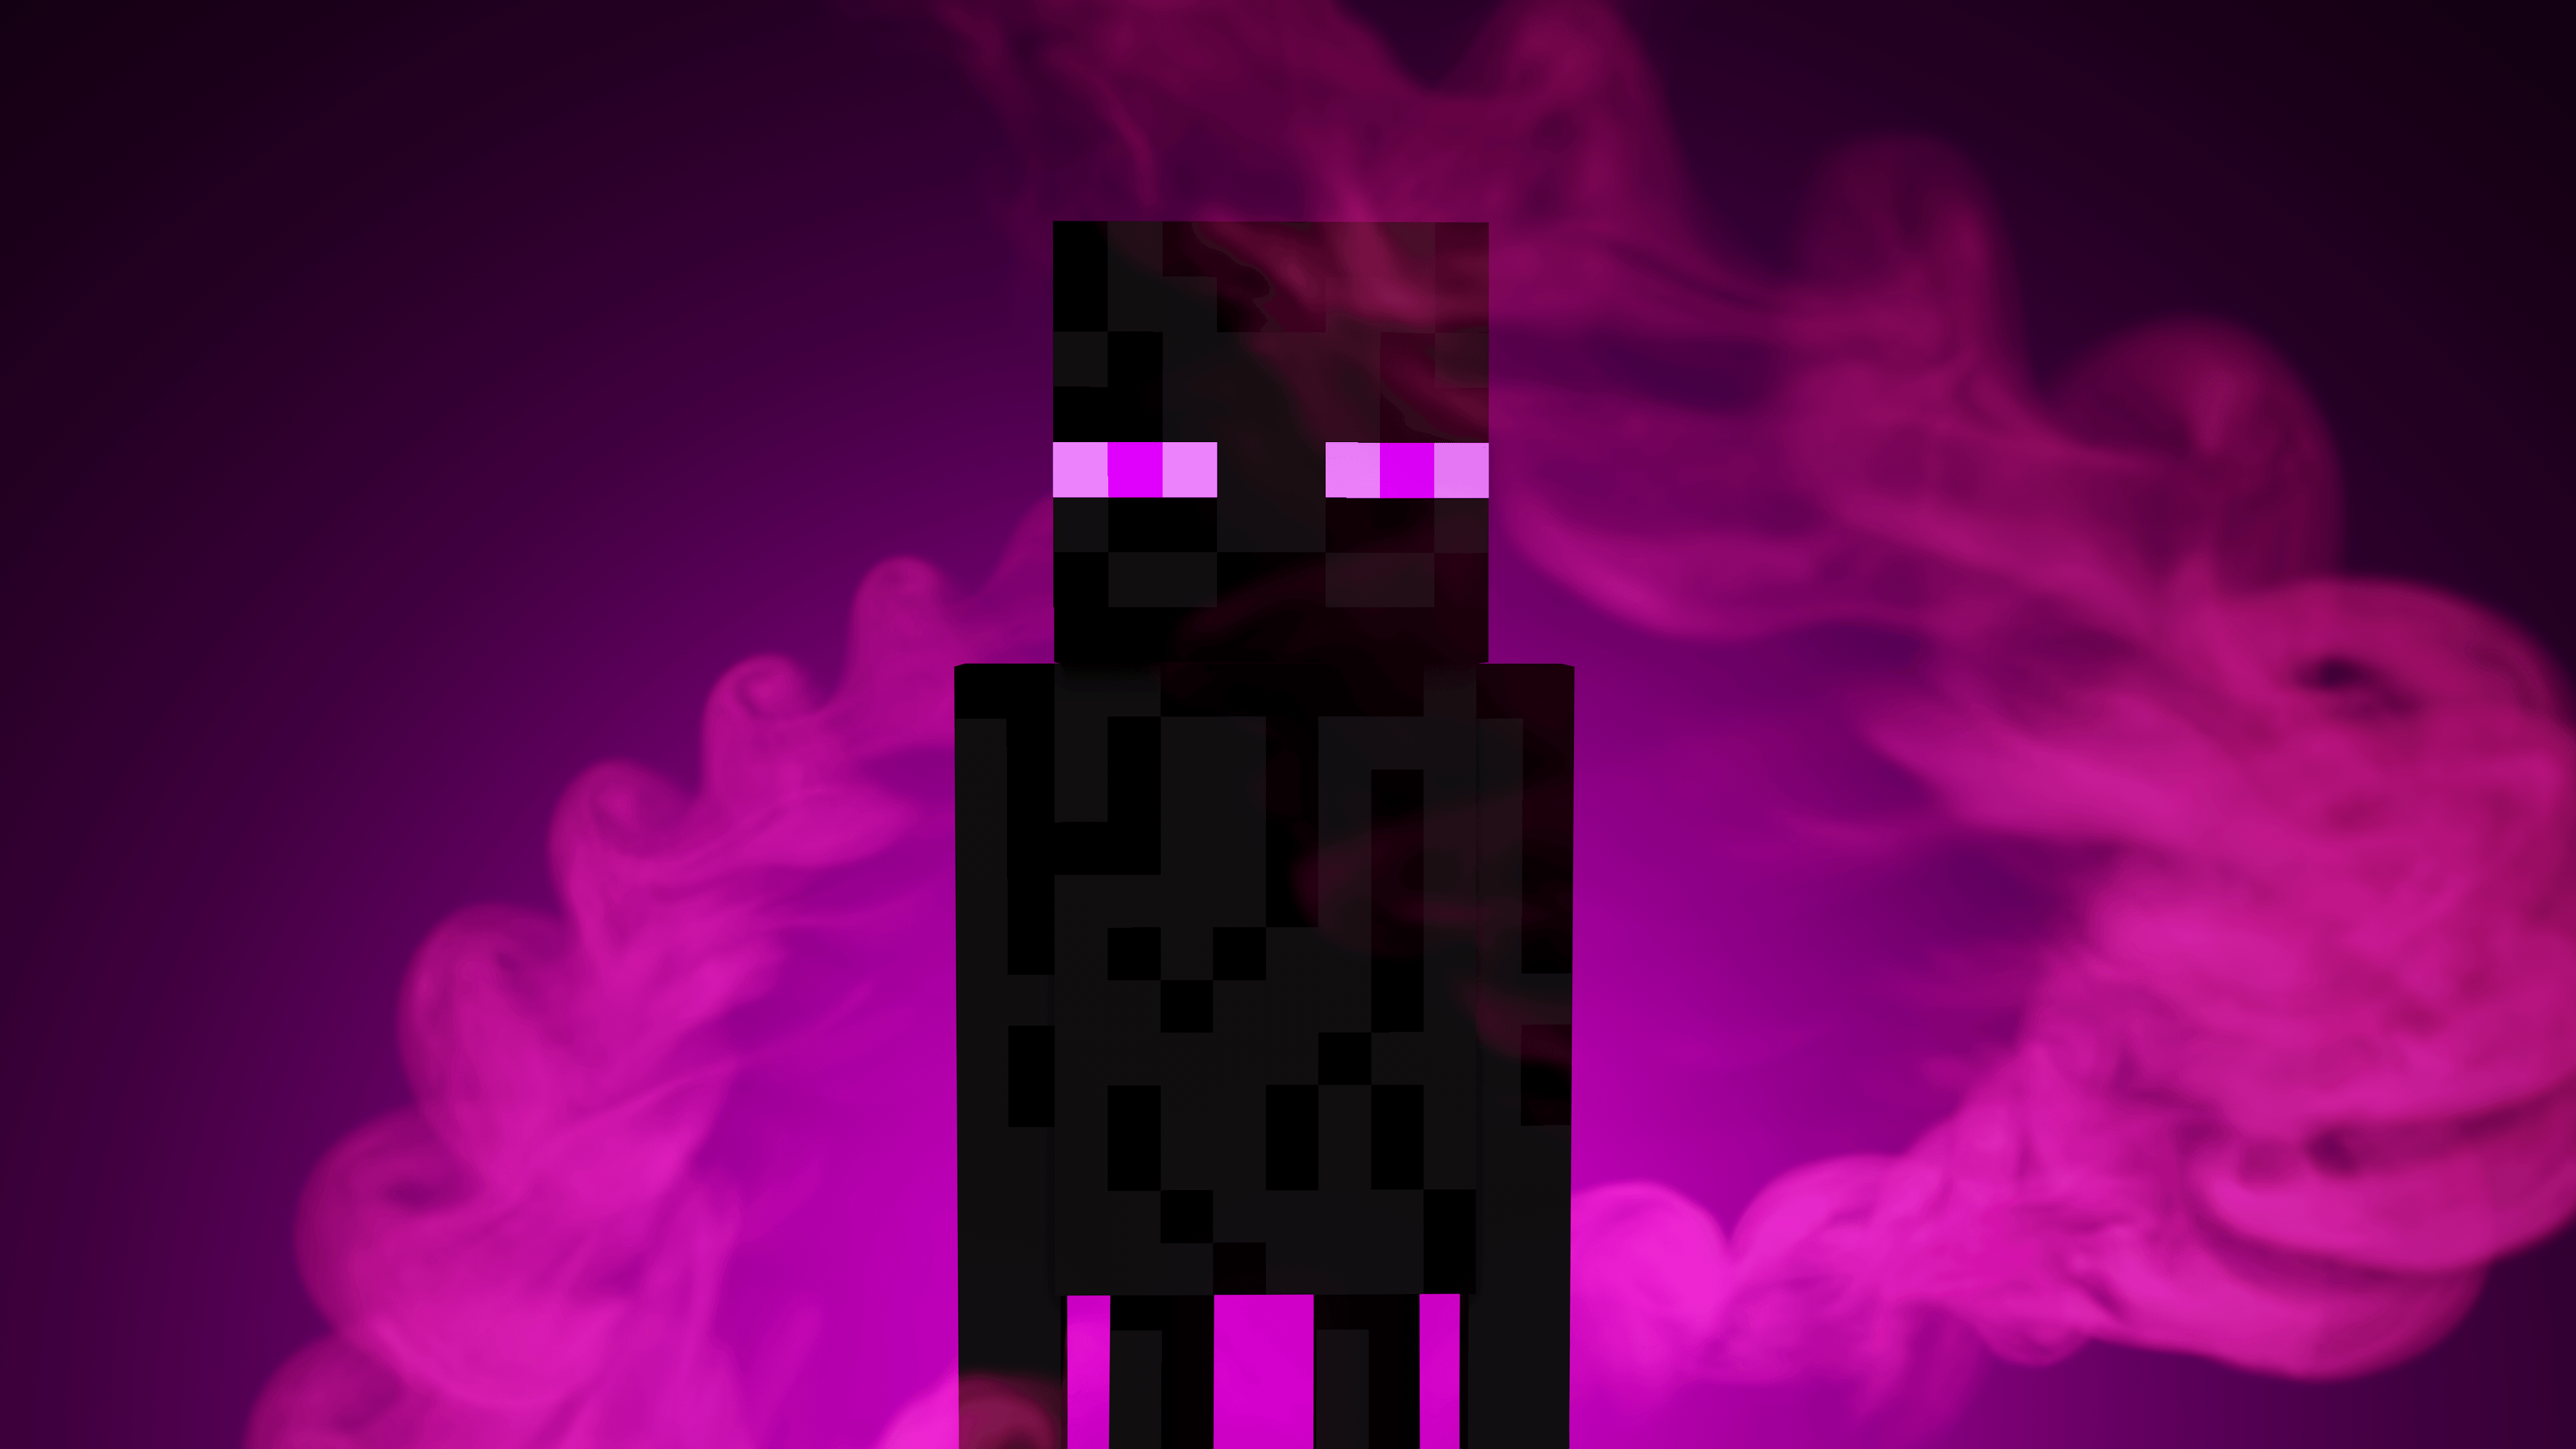 HD desktop wallpaper featuring a Minecraft Enderman with glowing purple eyes on a purple smoky background.